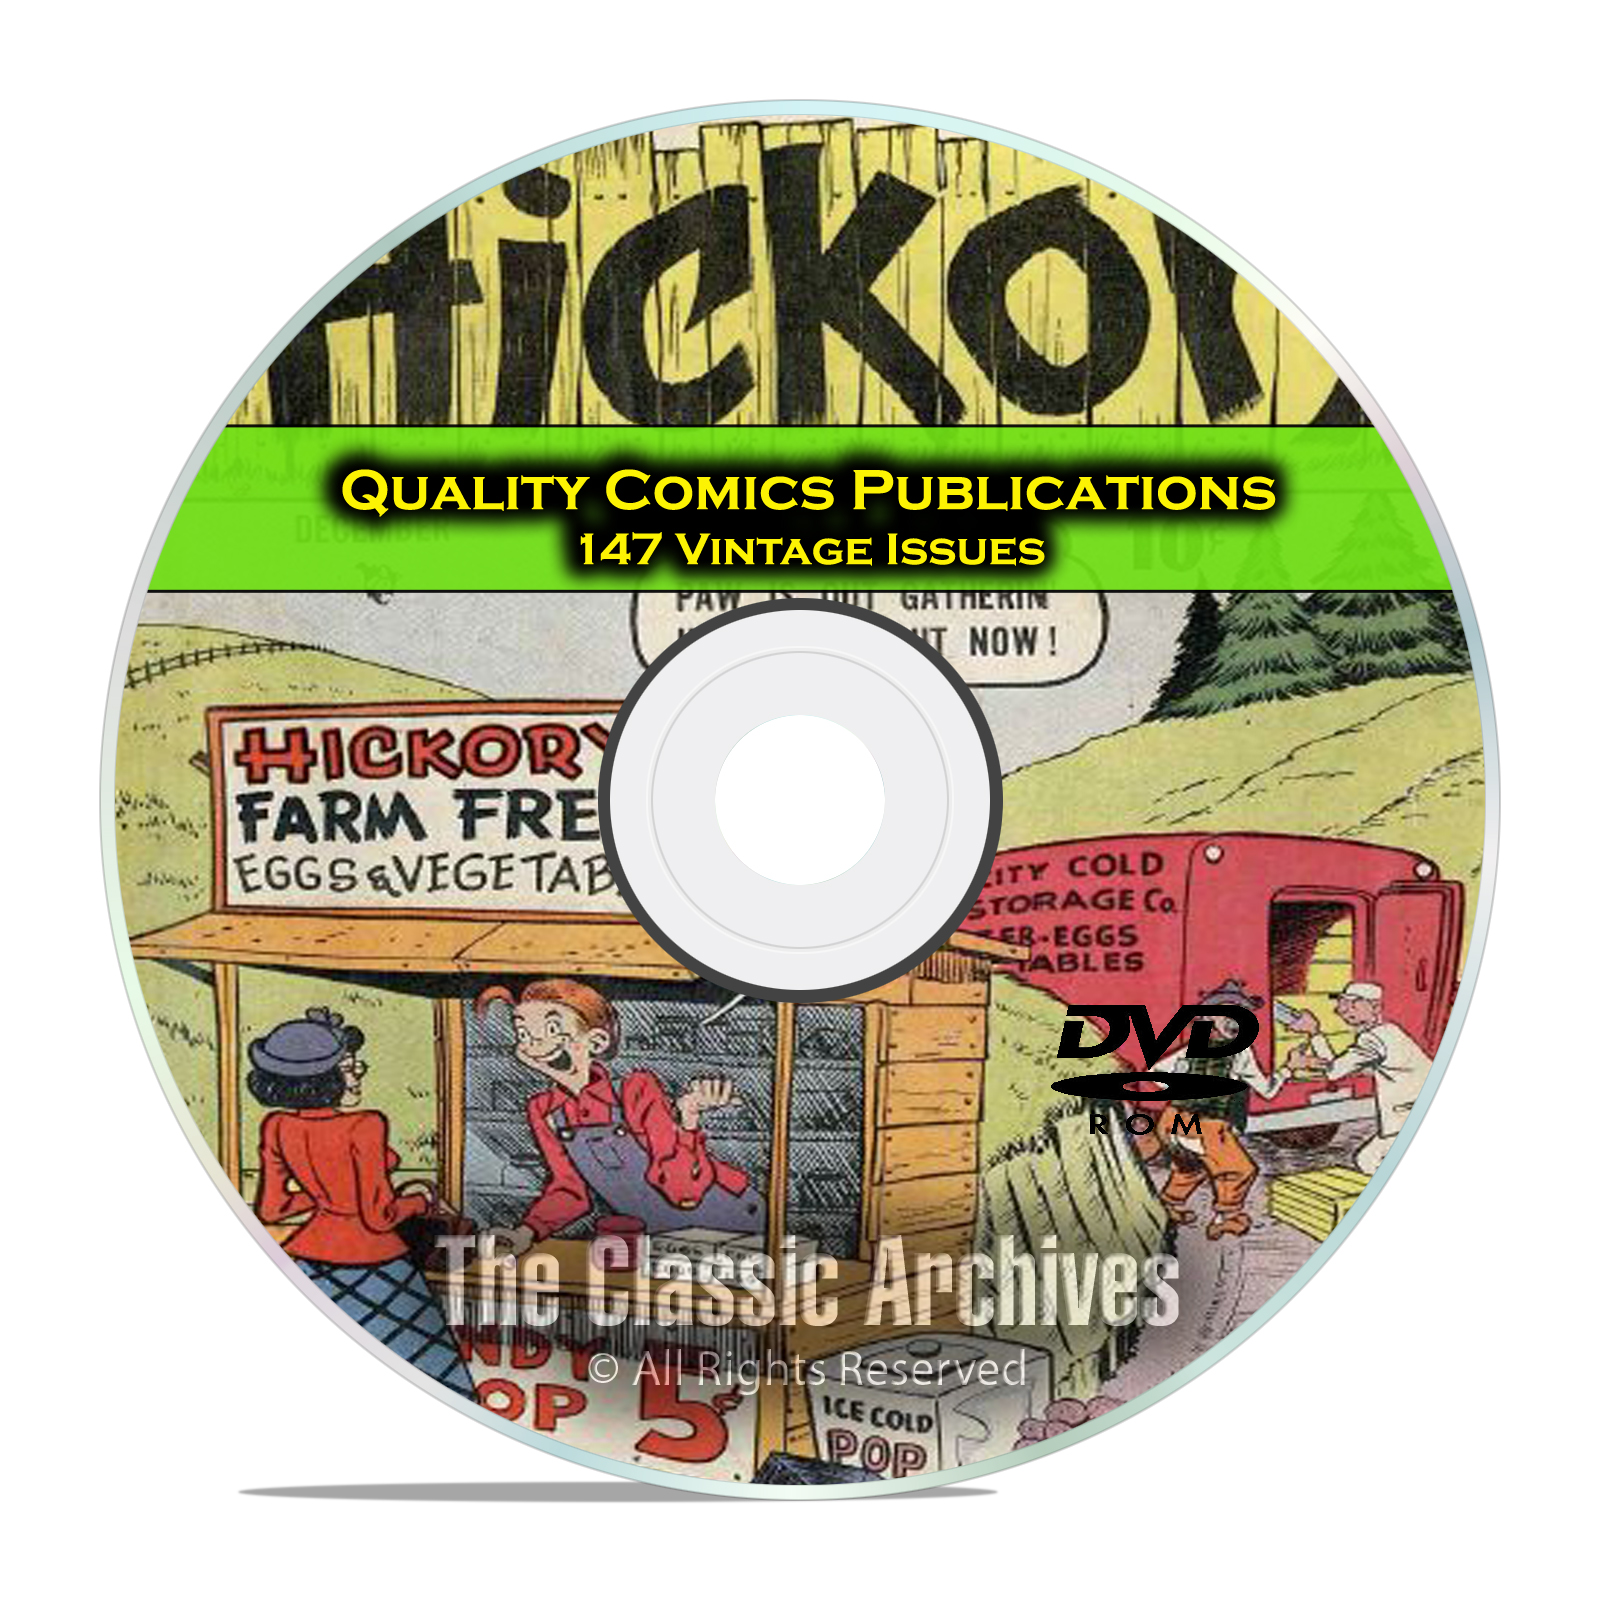 Quality Comics Modern Comics, The Spirit, Barker, 147 Golden Age Comics DVD